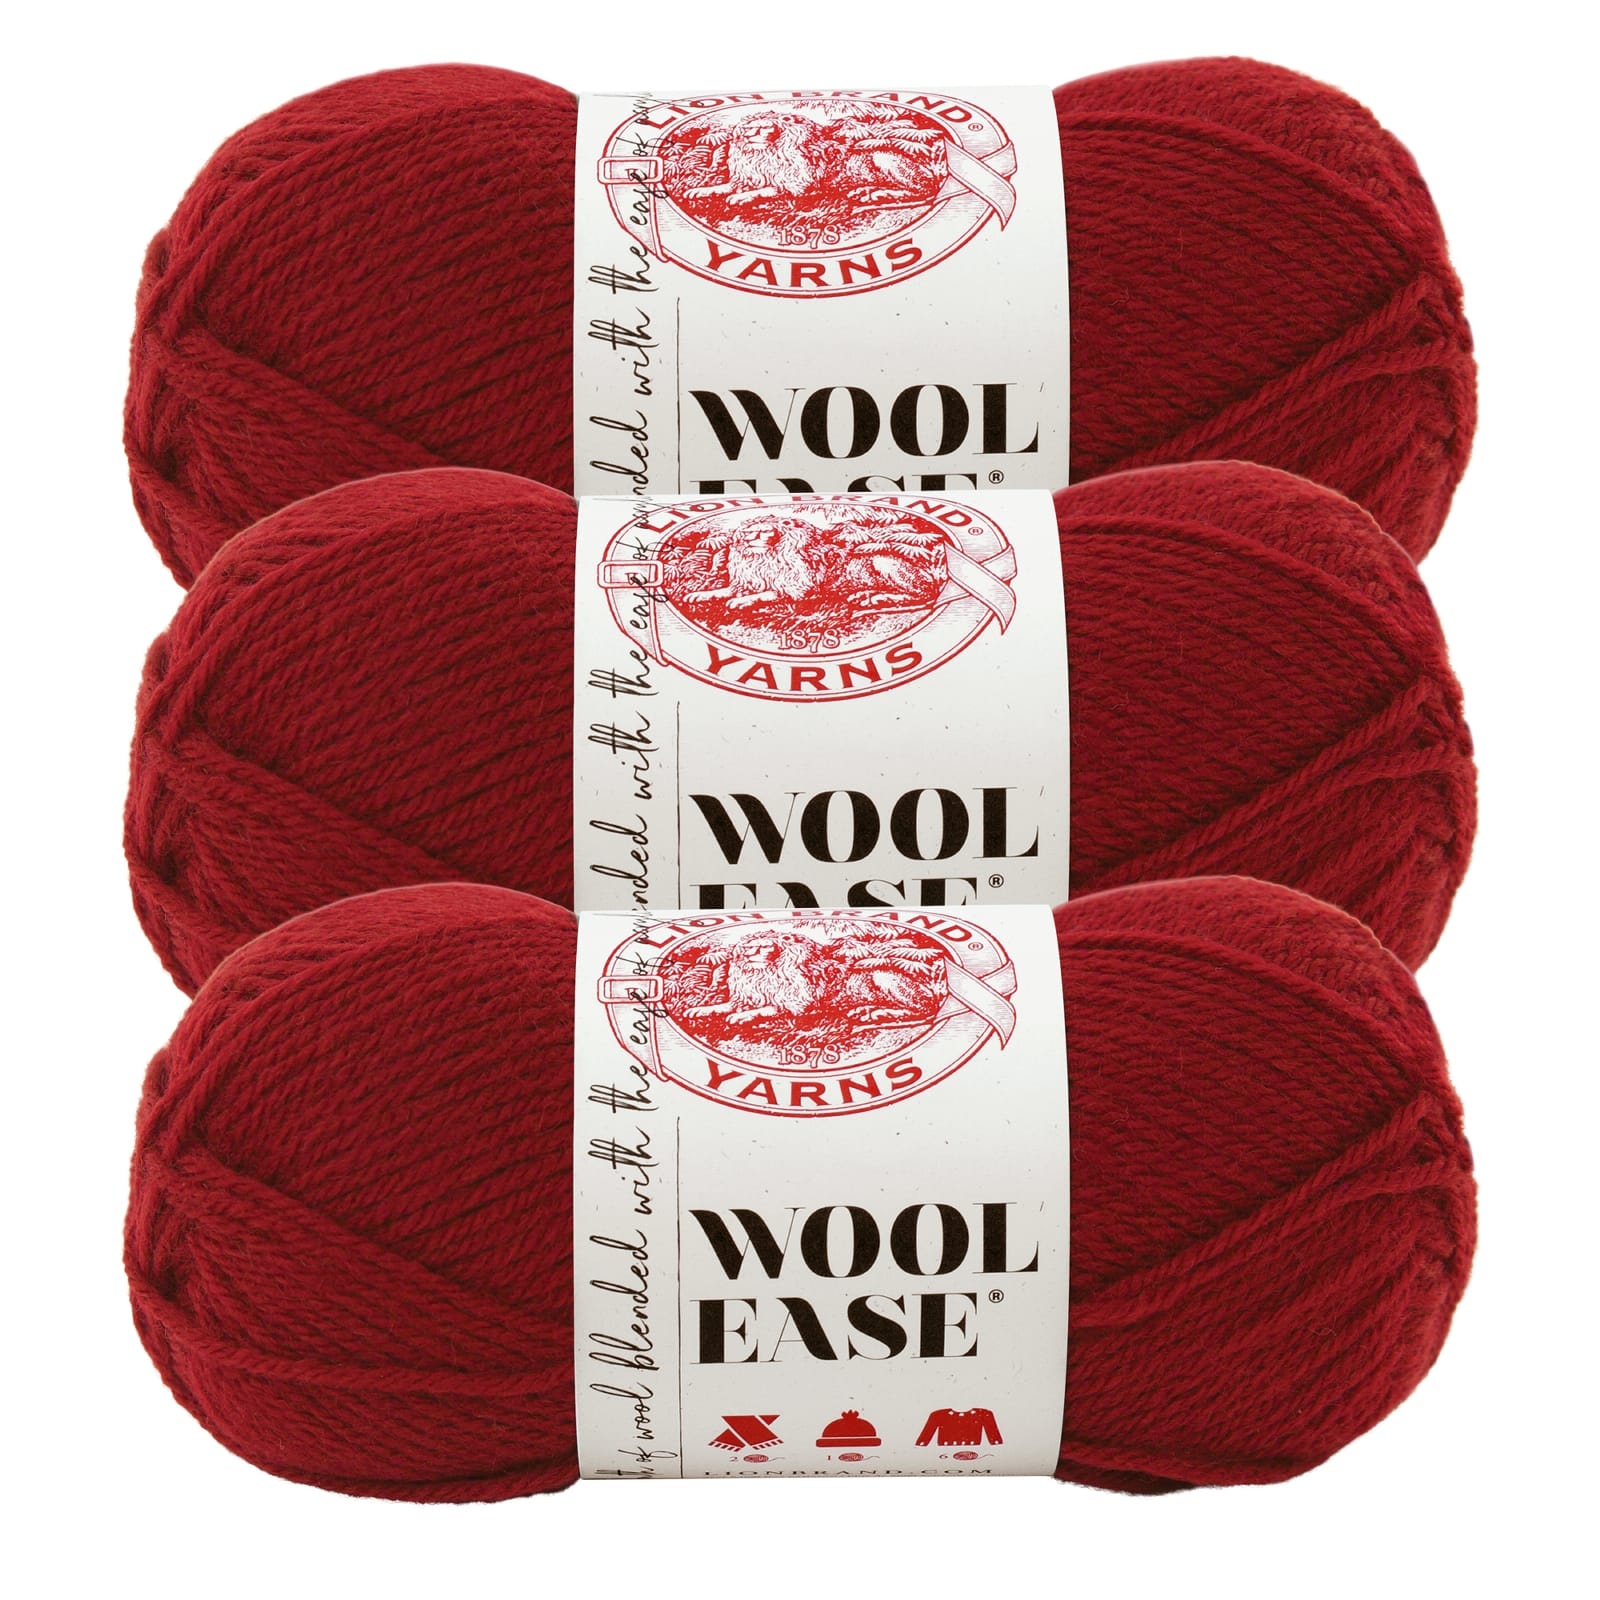 (3 Pack) Lion Brand Yarn Wool-Ease Yarn, Wheat